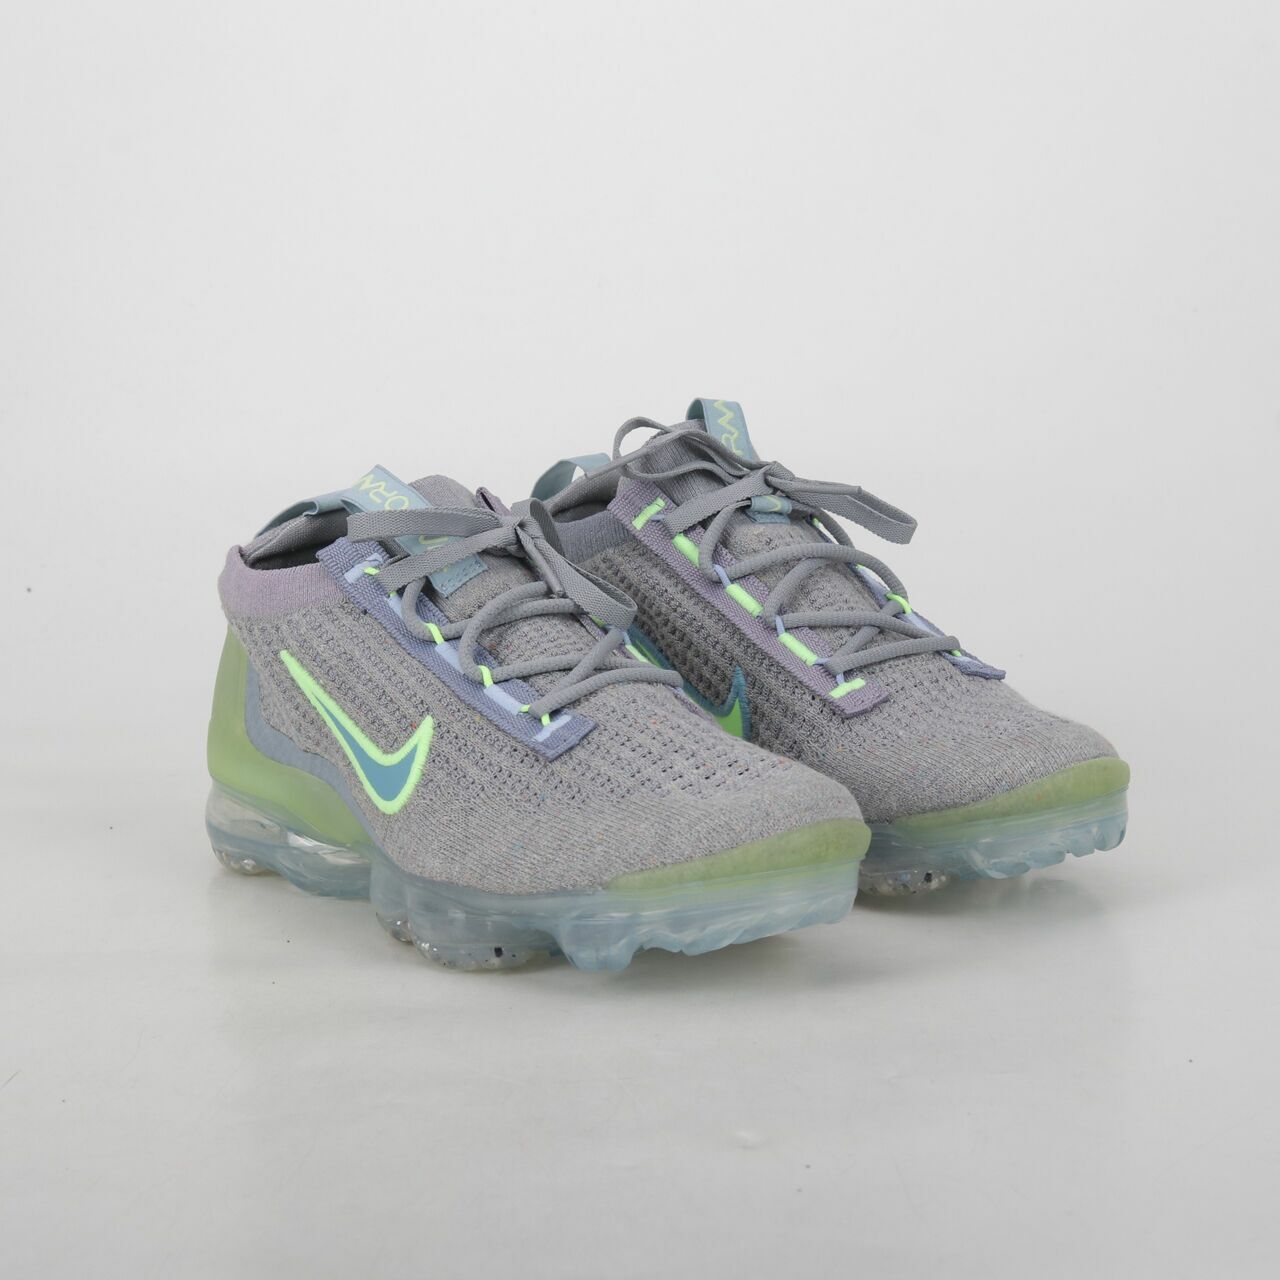 Nike Air Vapormax Particle Grey Shoes